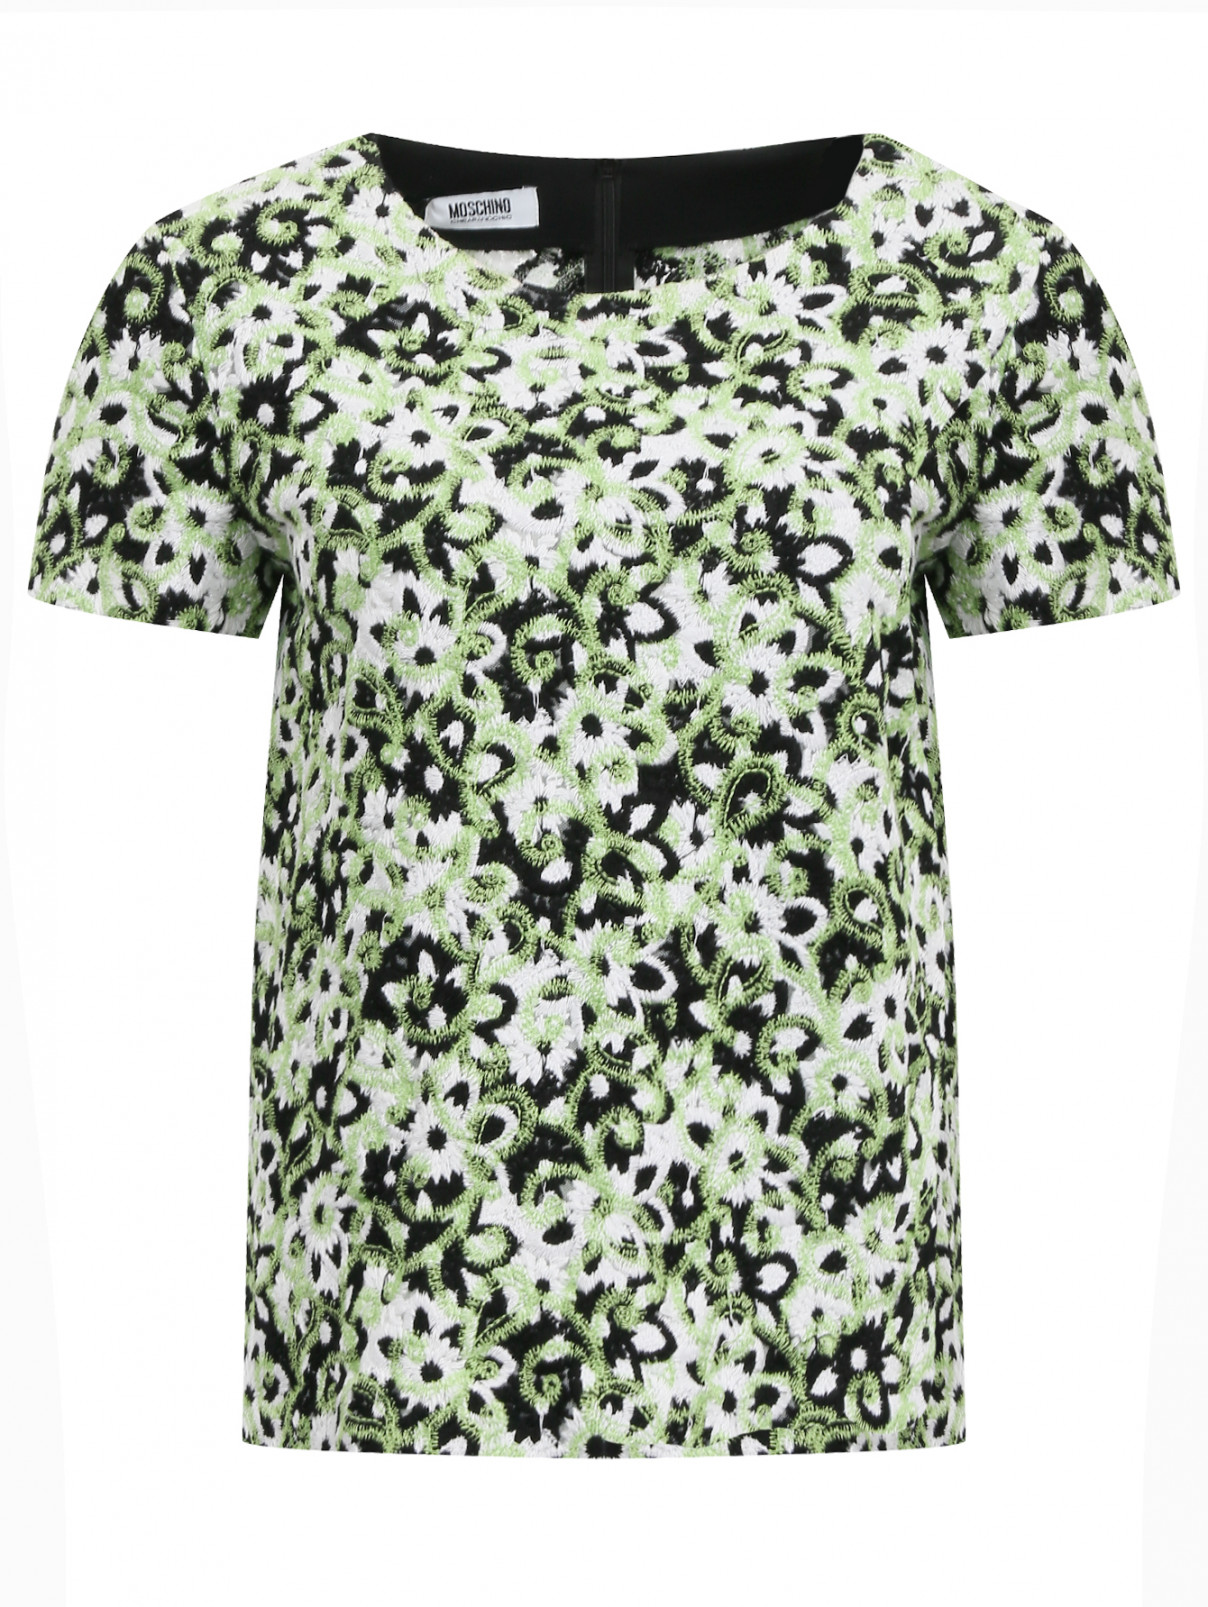 Блуза с ажурным узором Moschino Cheap&Chic  –  Общий вид  – Цвет:  Узор